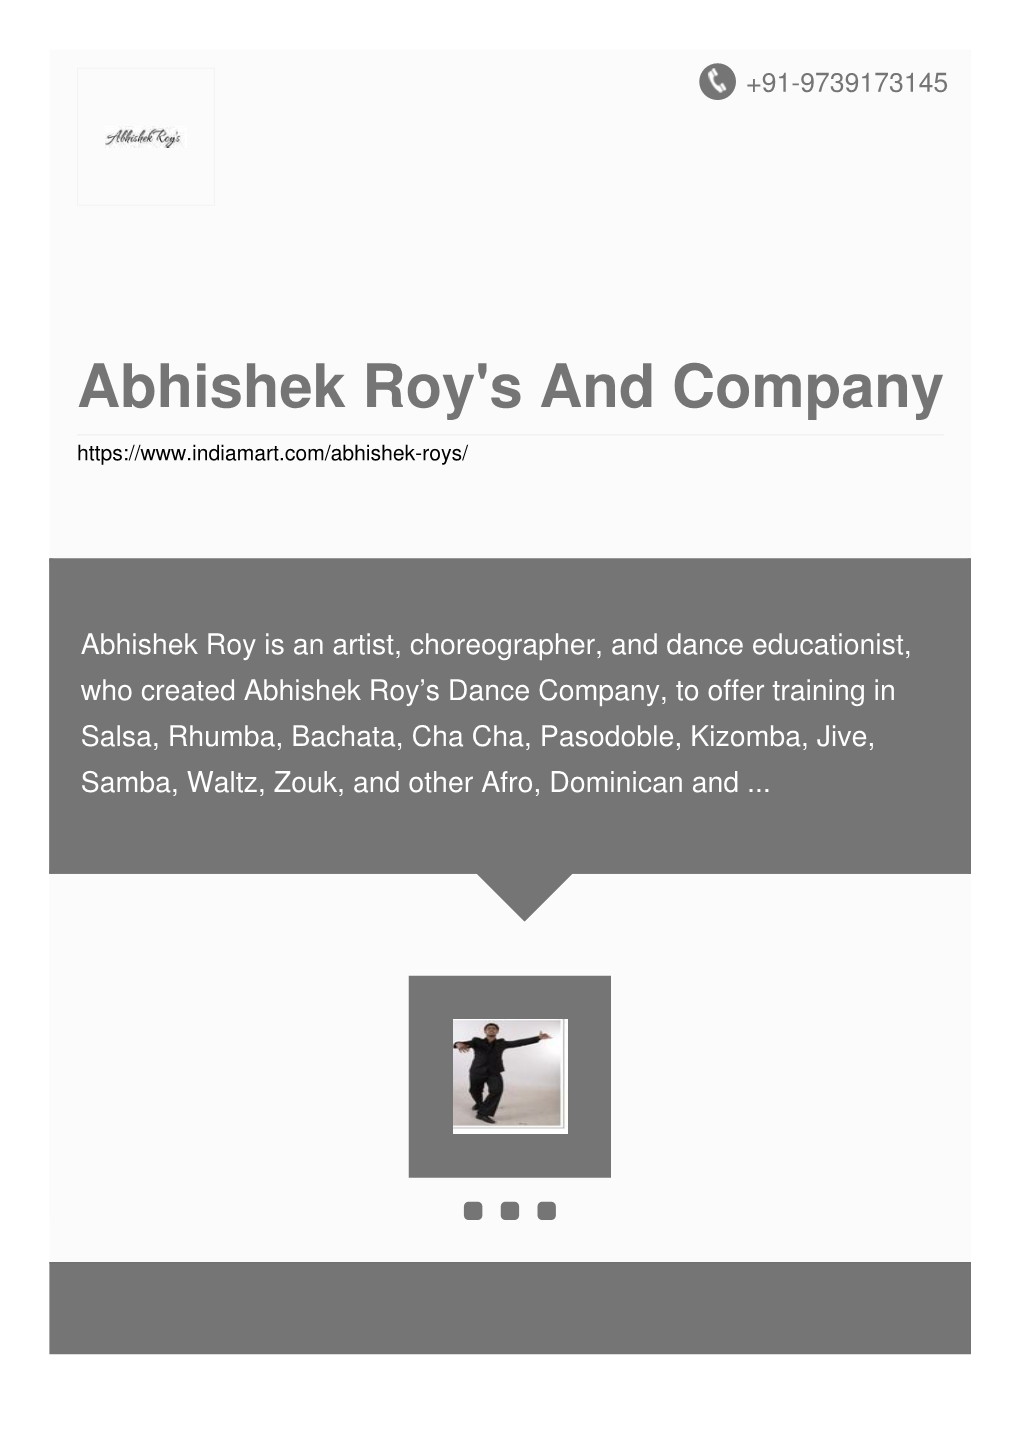 Abhishek Roy's and Company